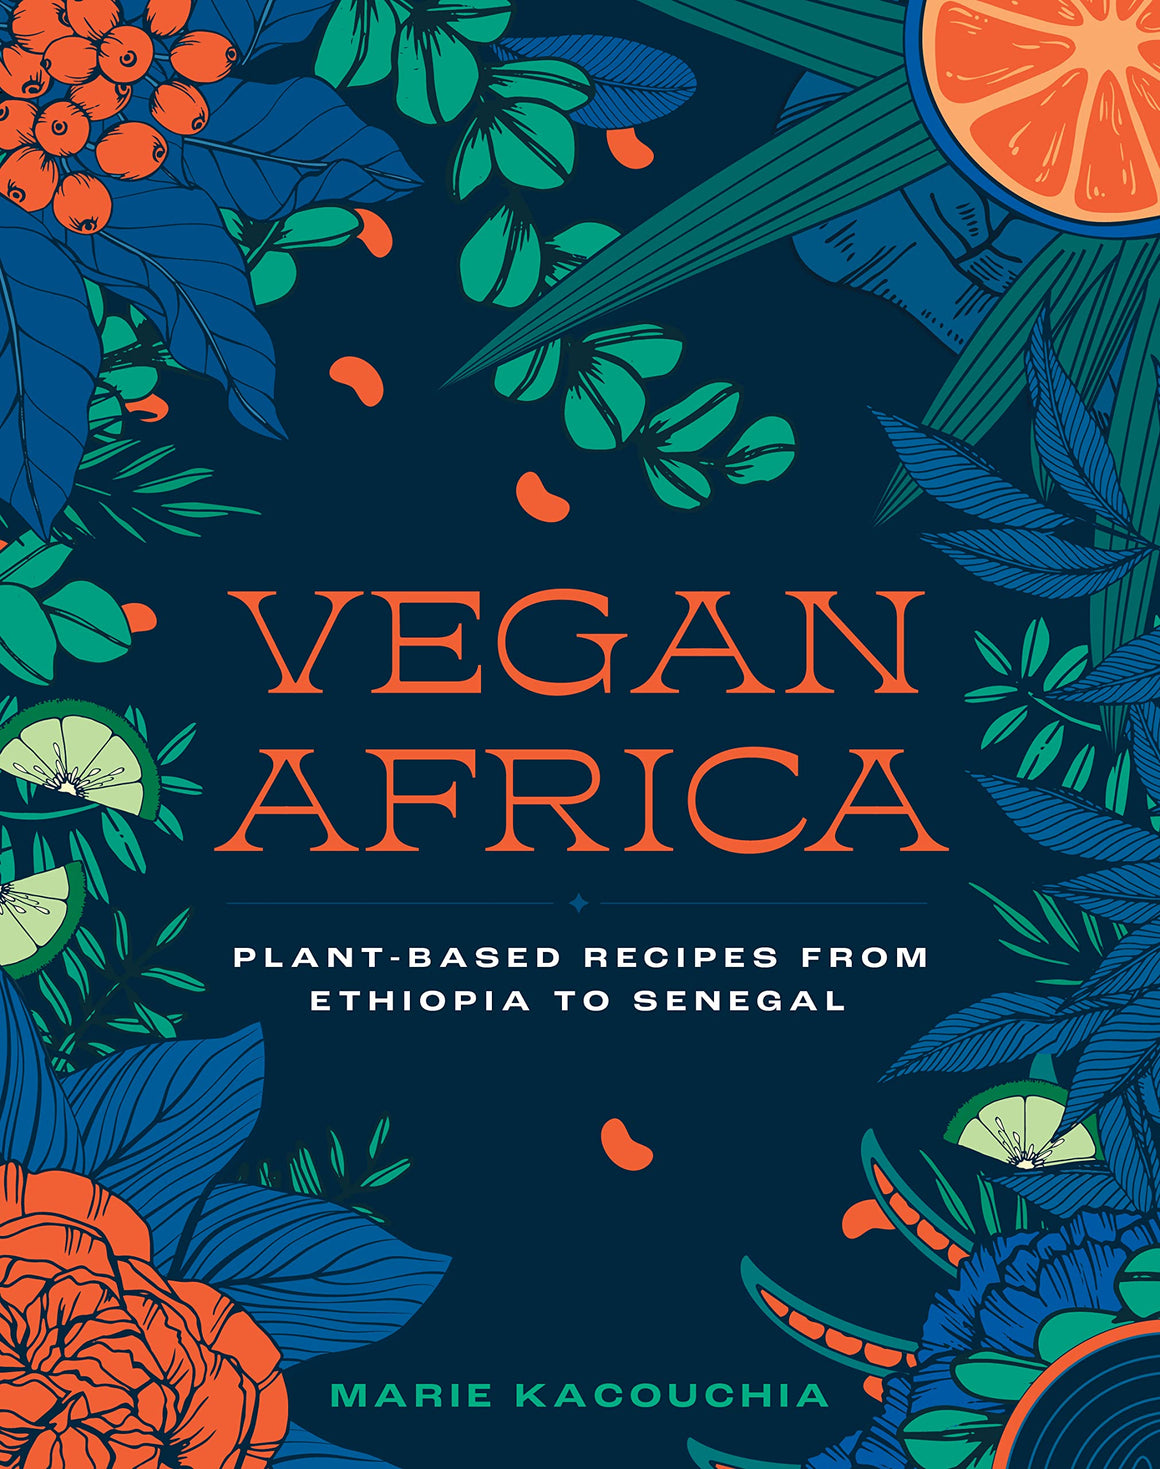 Vegan Africa: Plant-Based Recipes from Ethiopia to Senegal (Marie Kacouchia)